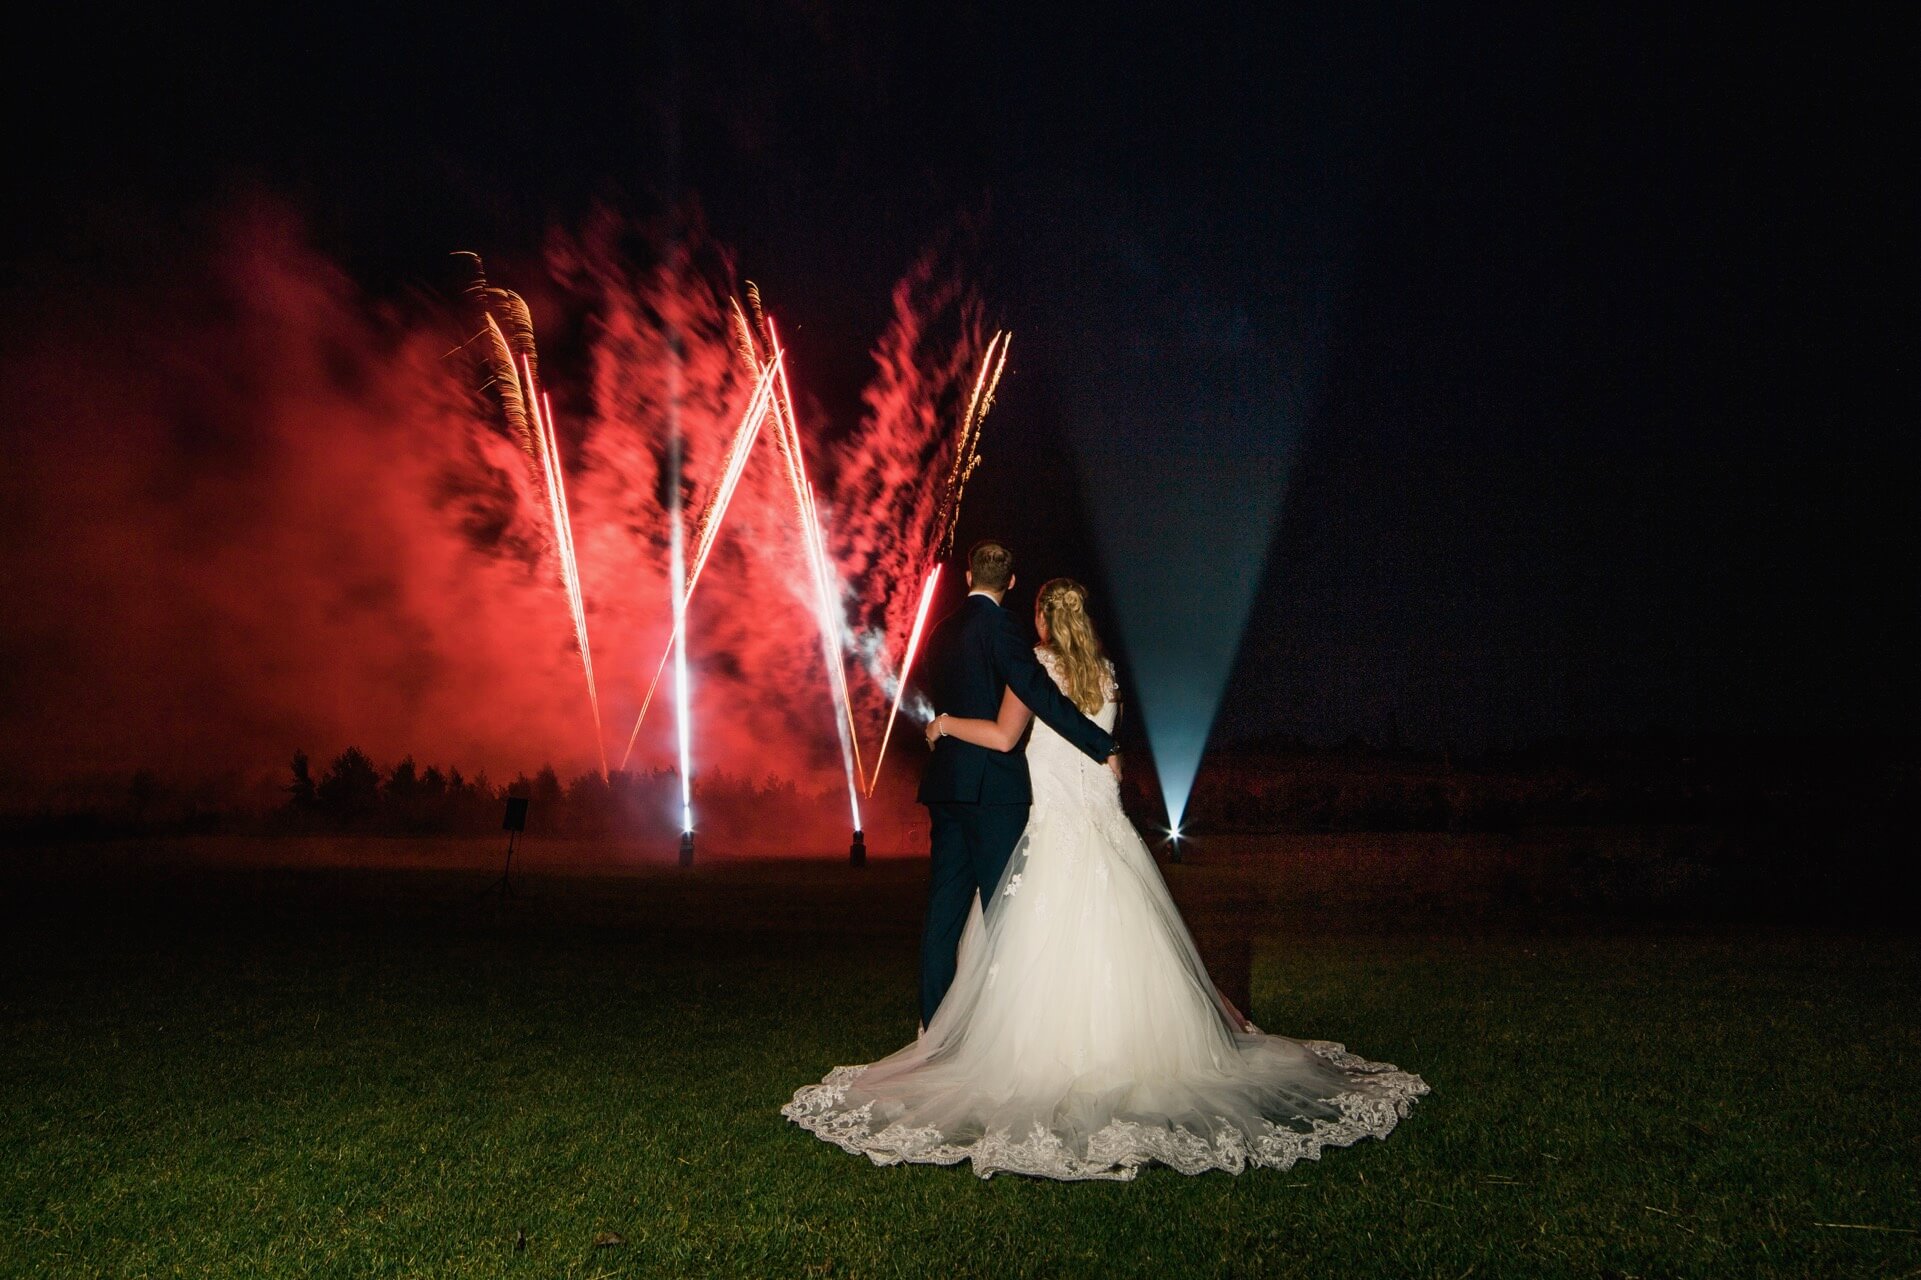 fireworks display at a wedding